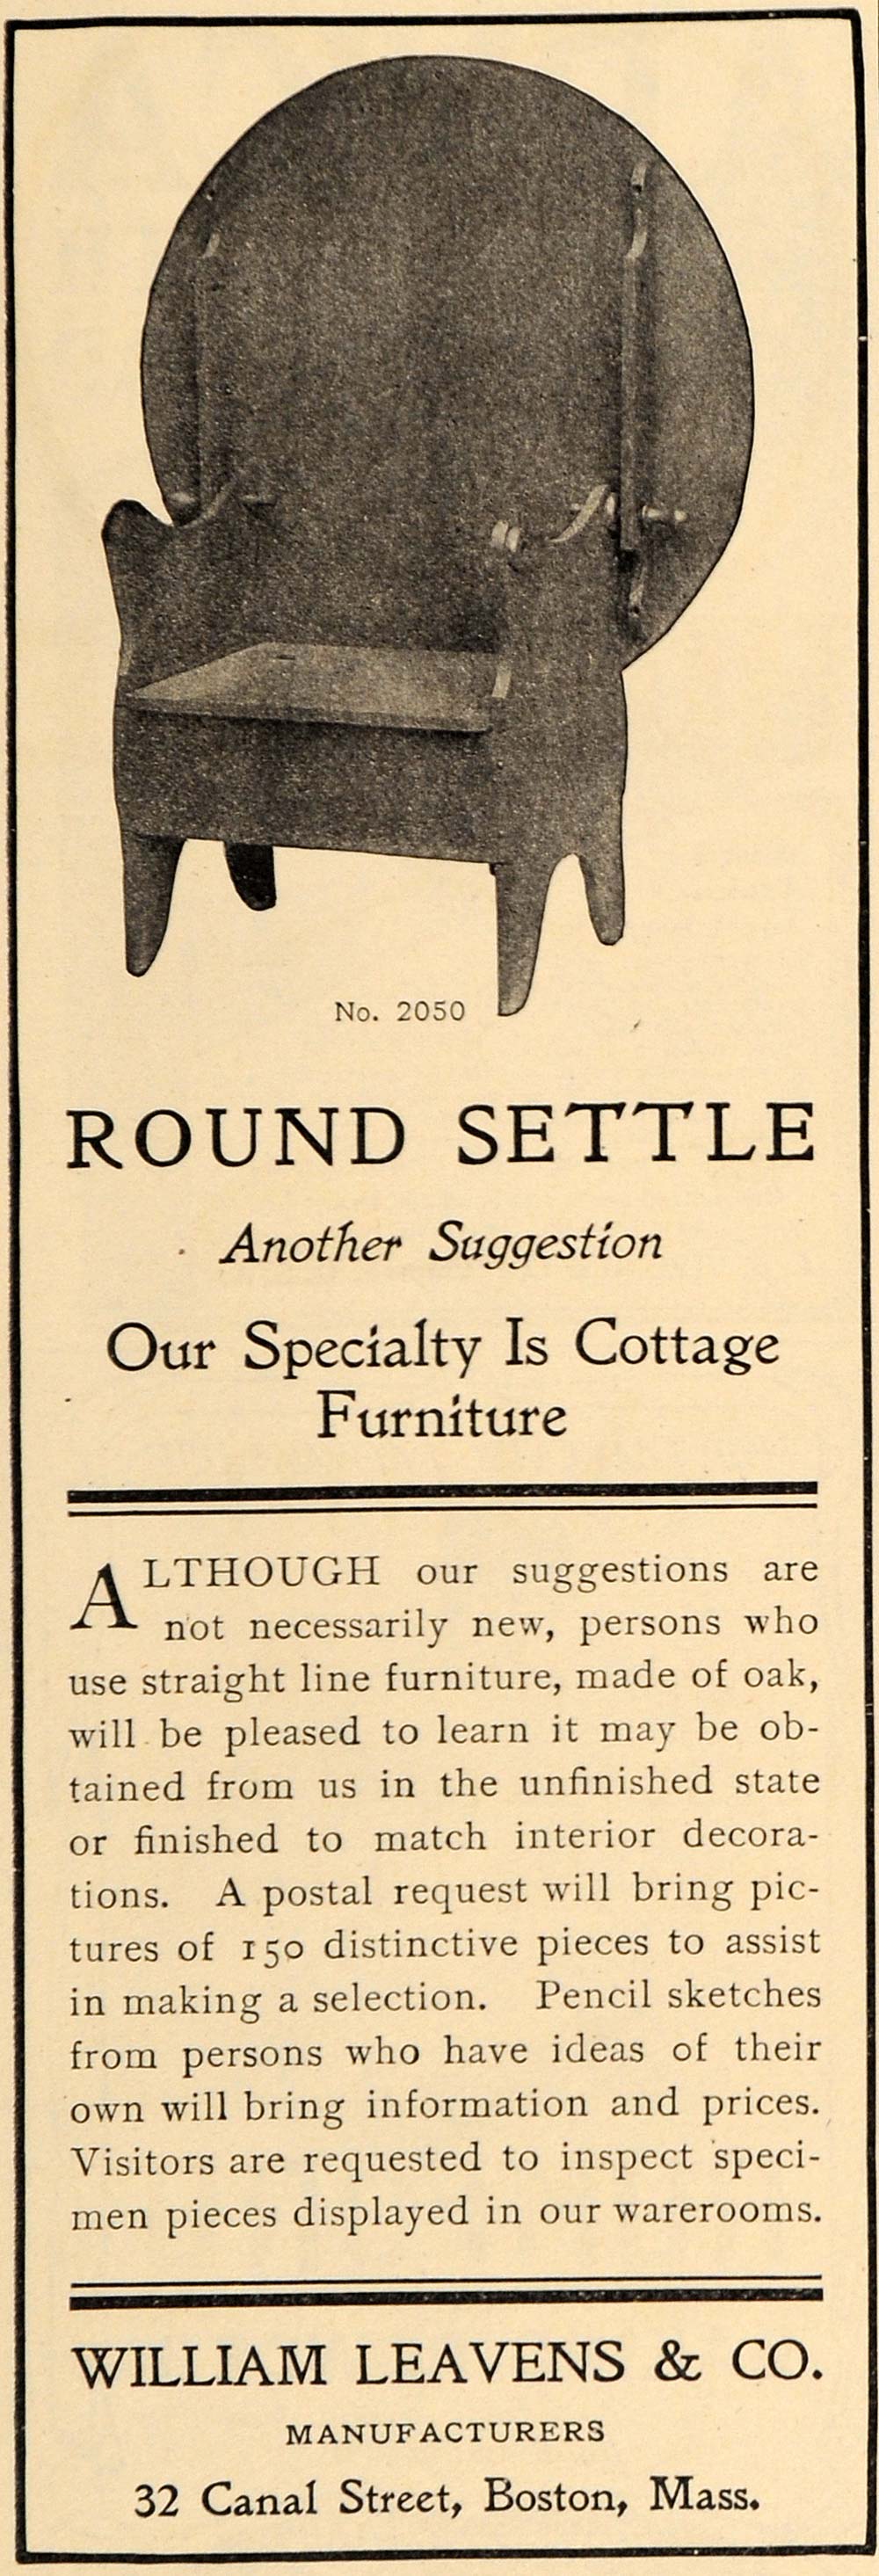 1909 Ad William Leavens & Co. Round Settle Furniture - ORIGINAL ADVERTISING GH3